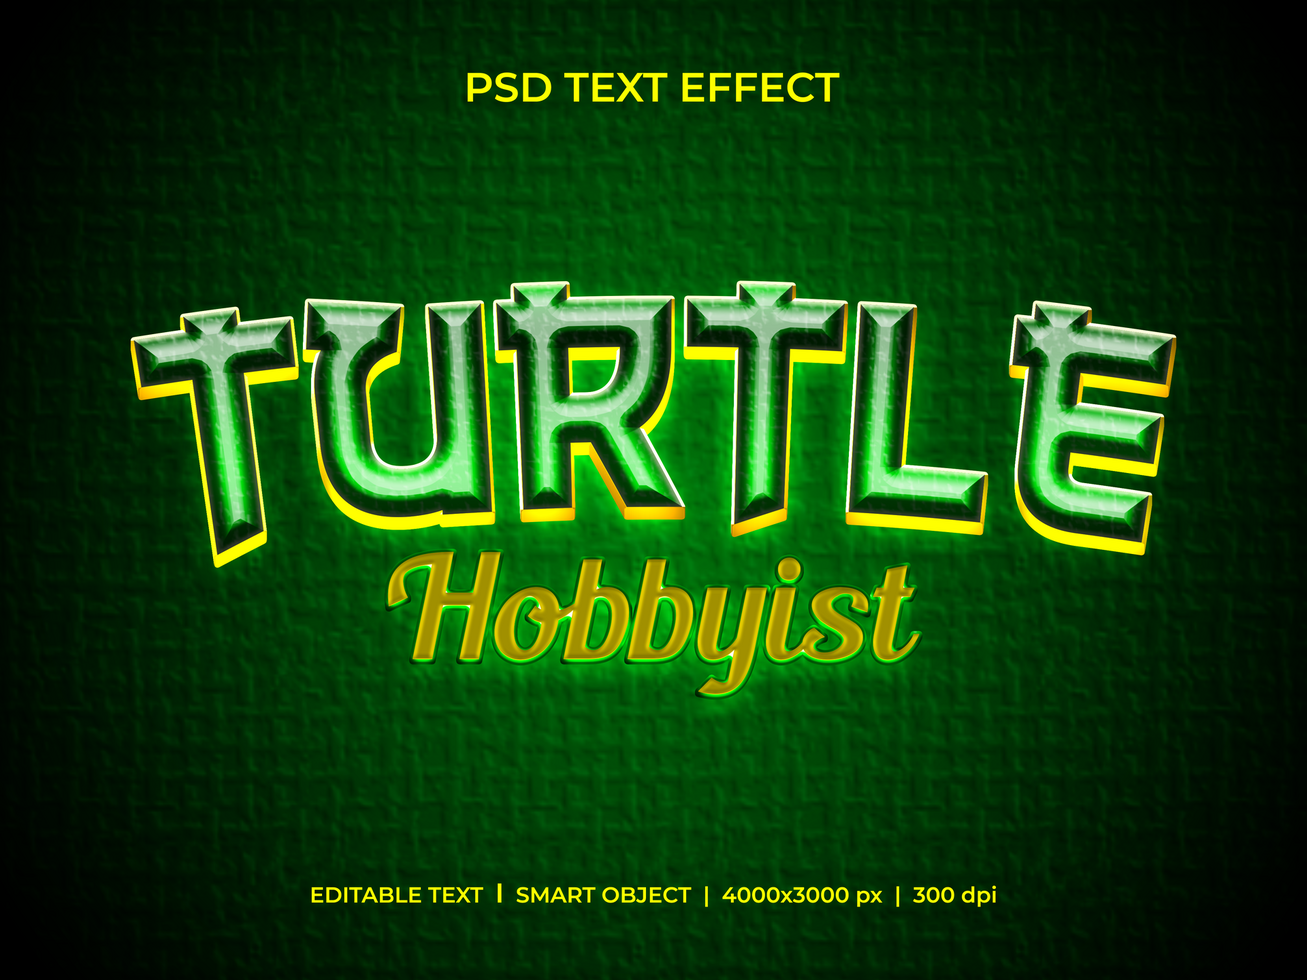 Turtle hobbyist text effect psd